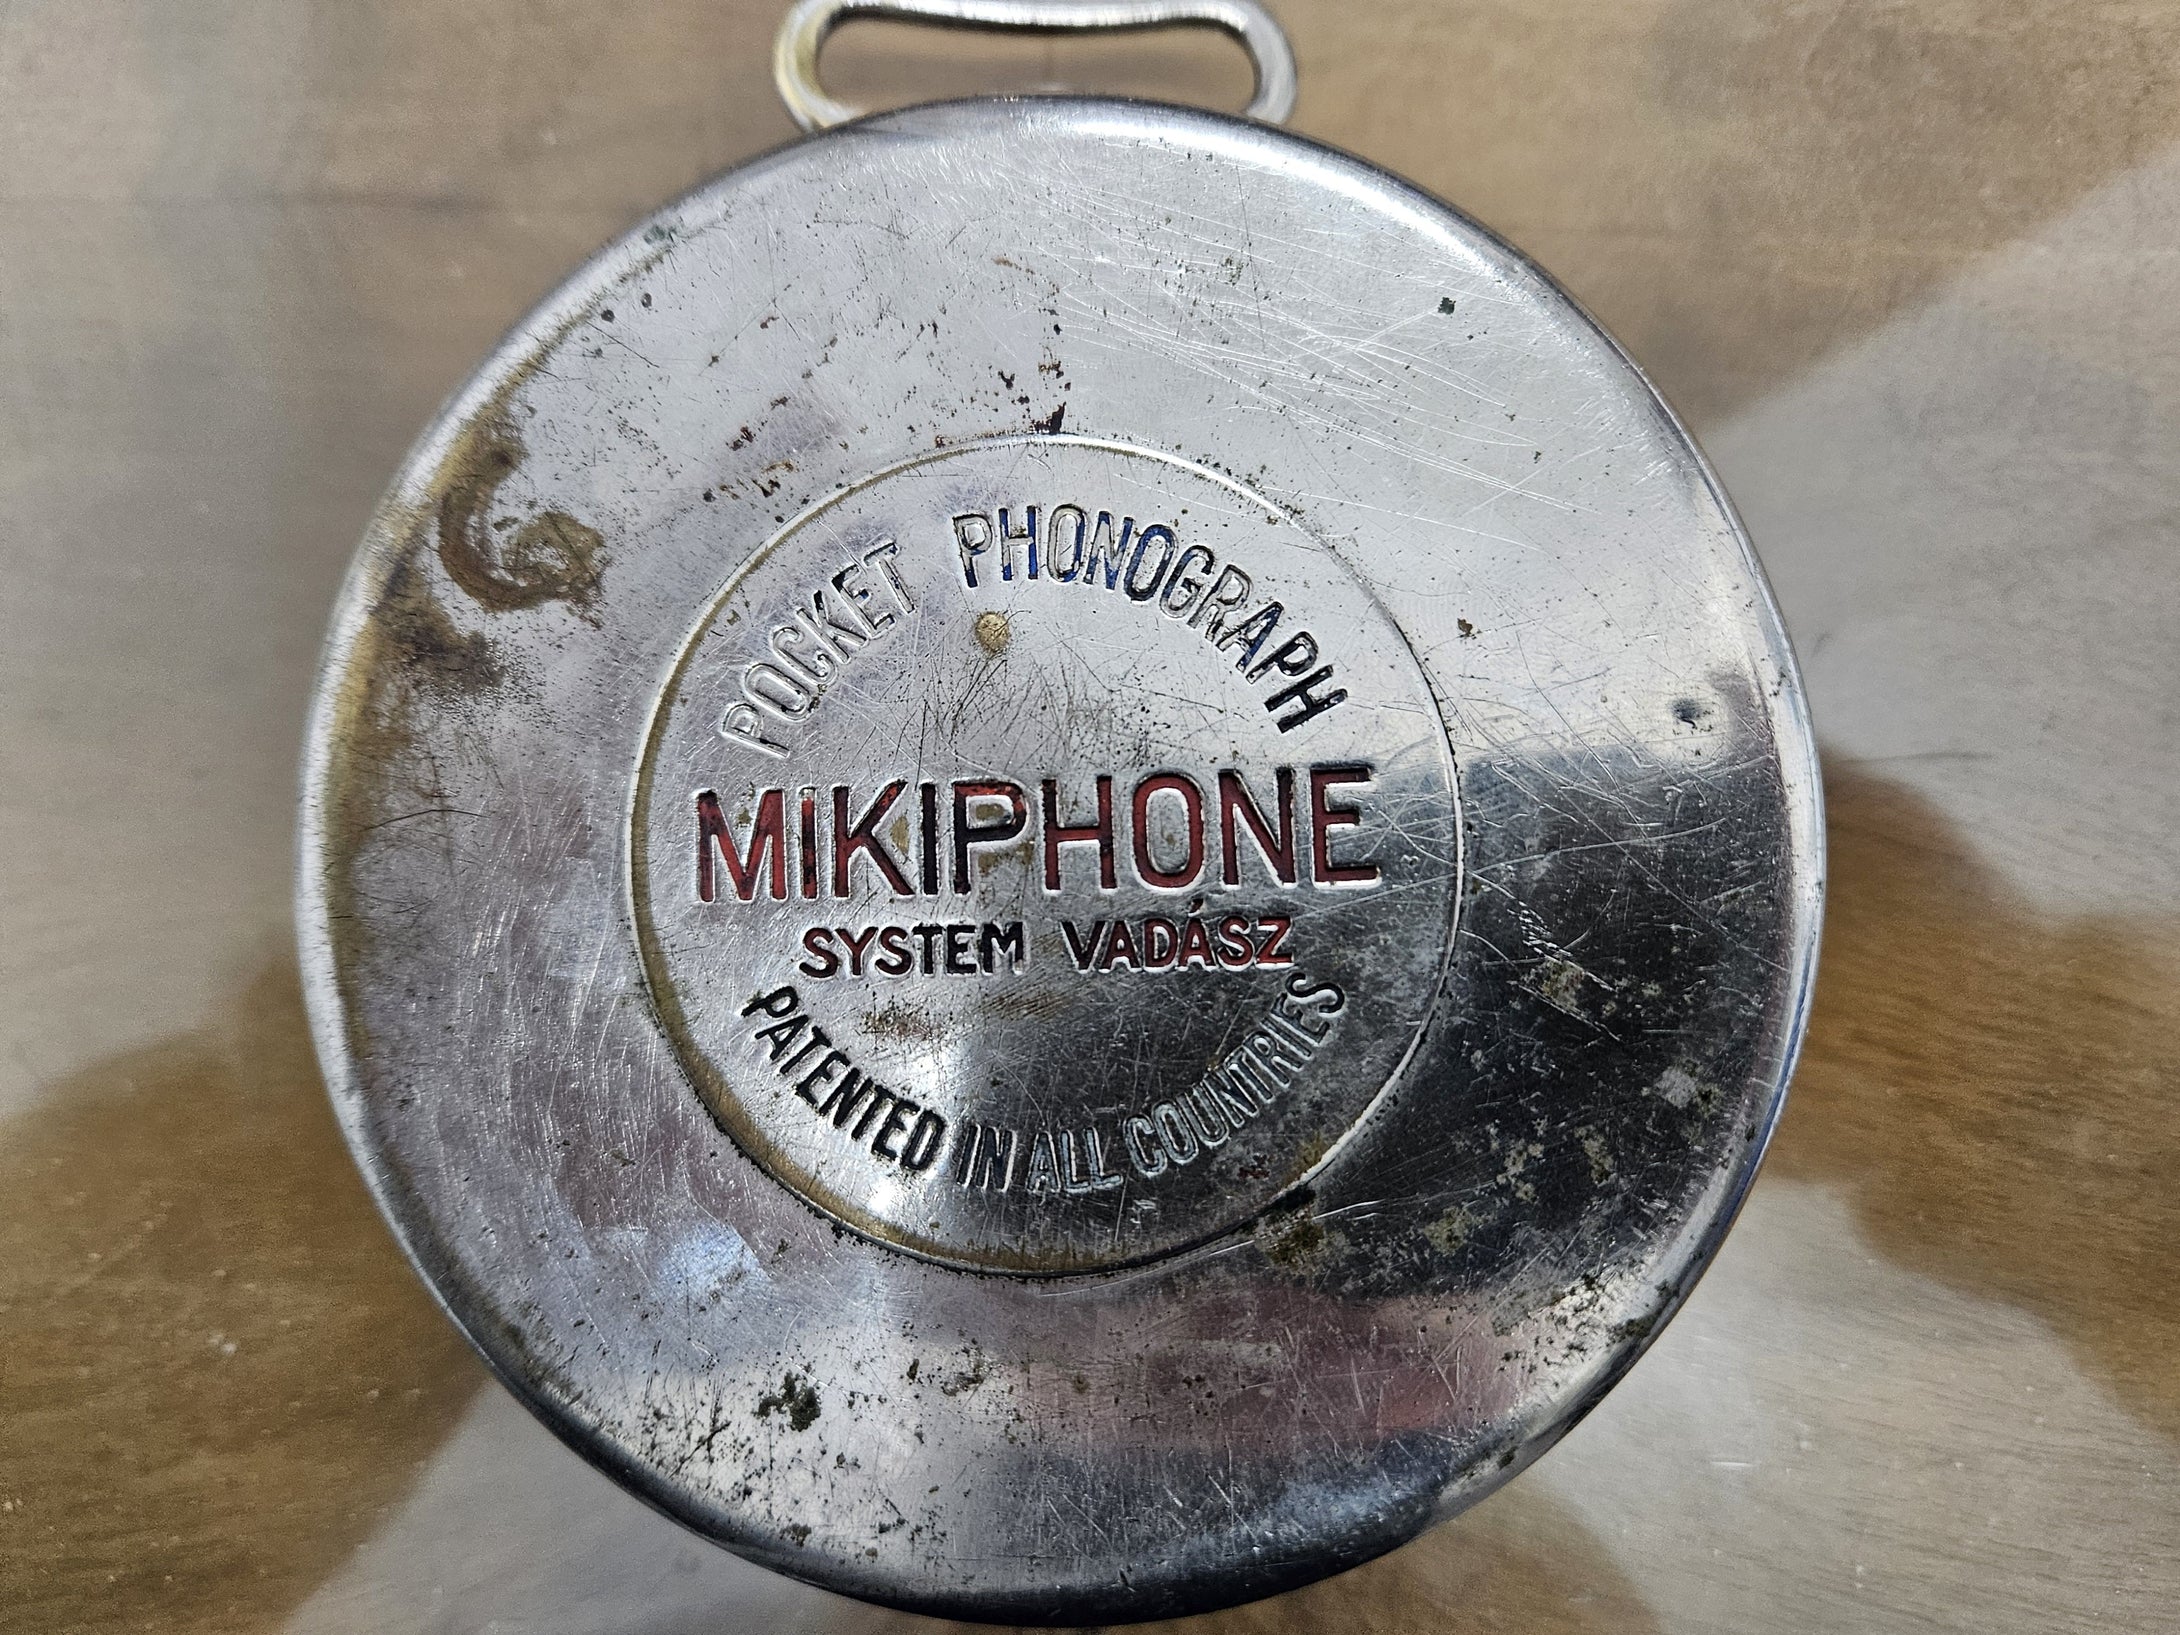 Reisegrammophon Mikiphone Pocket Phonograph System Vadasz